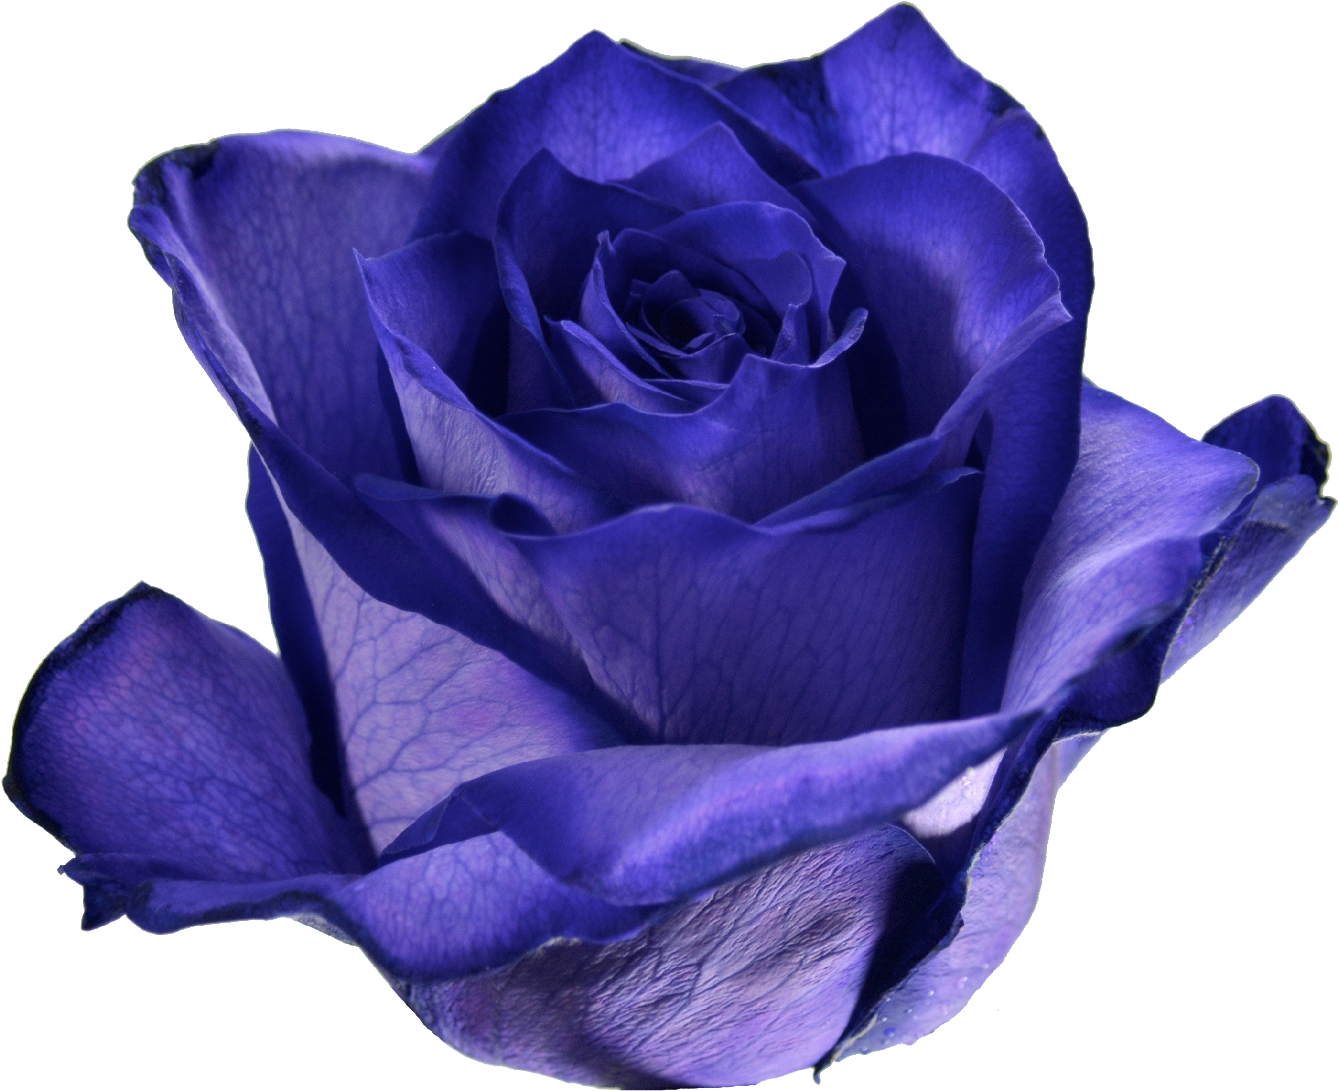 08 Ultraviolet - Garden Roses (1411x1417)